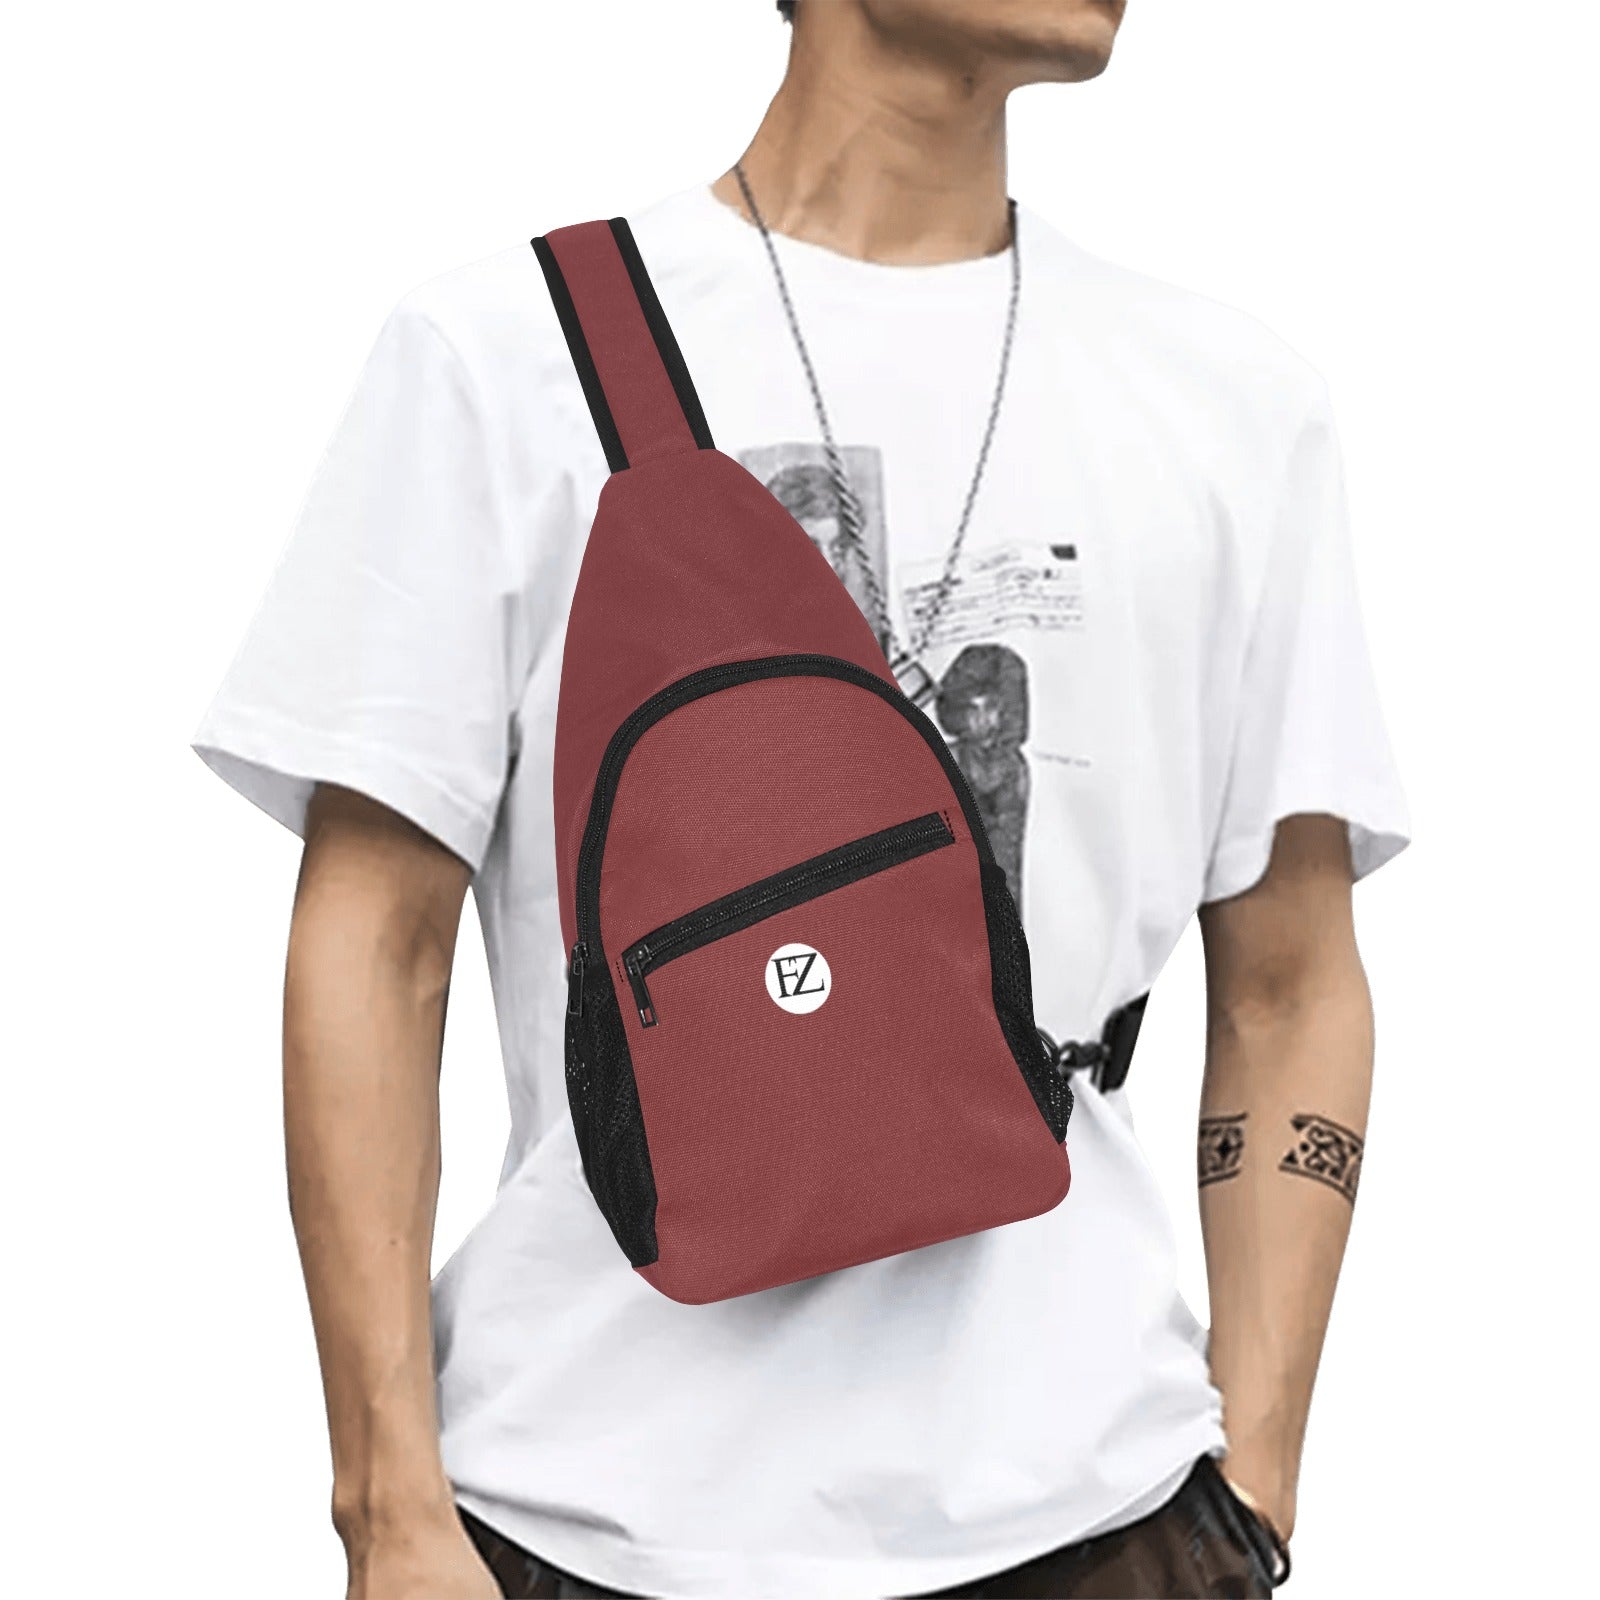 fz men's chest bag too one size / fz chest bag-burgundy all over print chest bag(model1719)